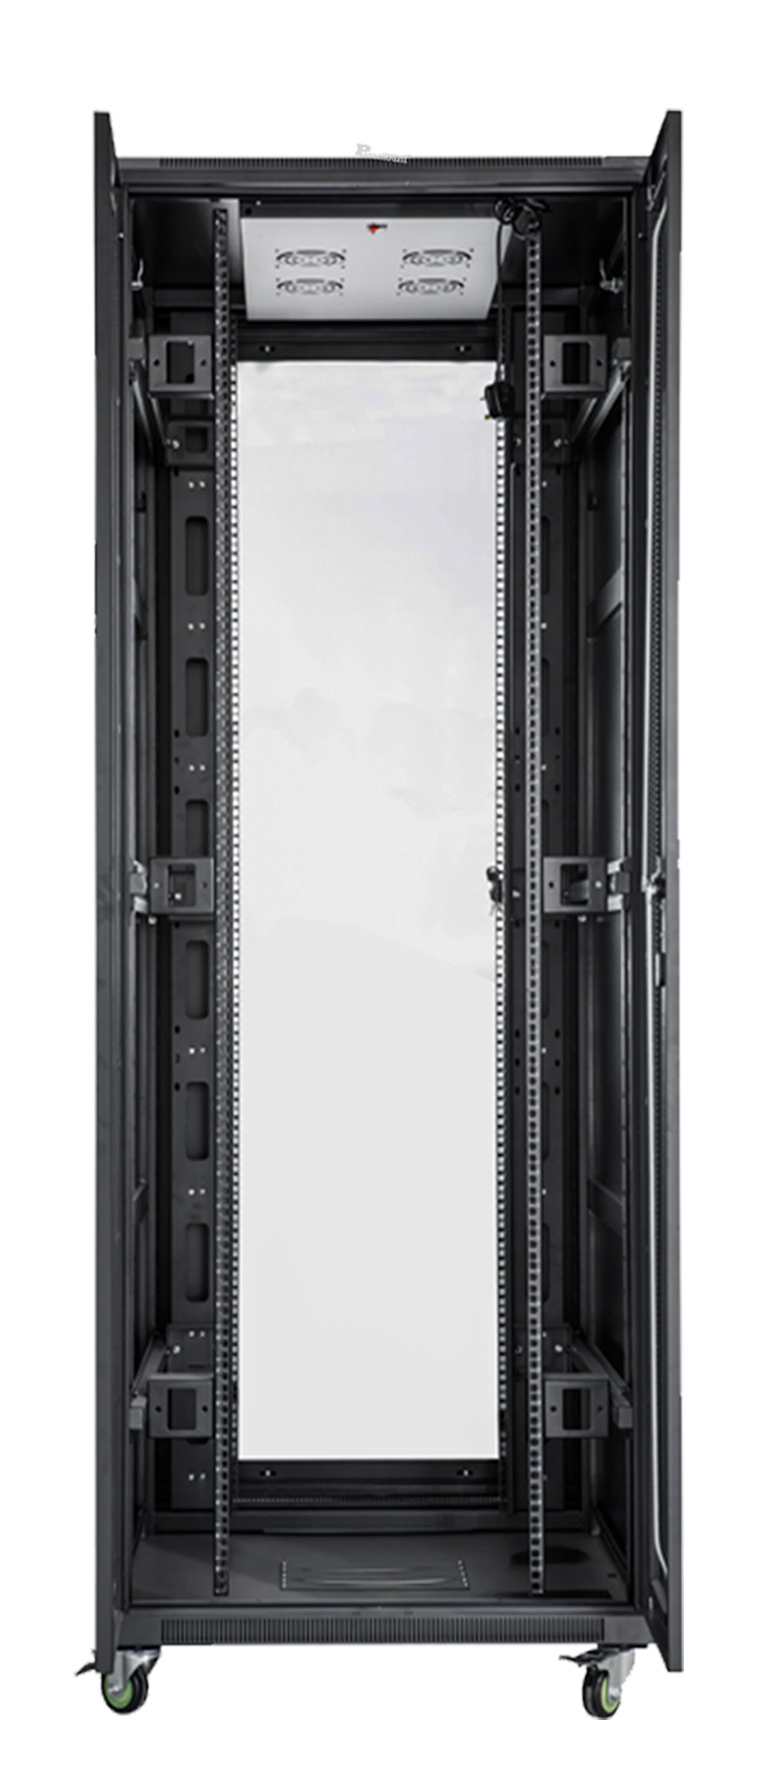 42U 600mm x 800mm Server Cabinet